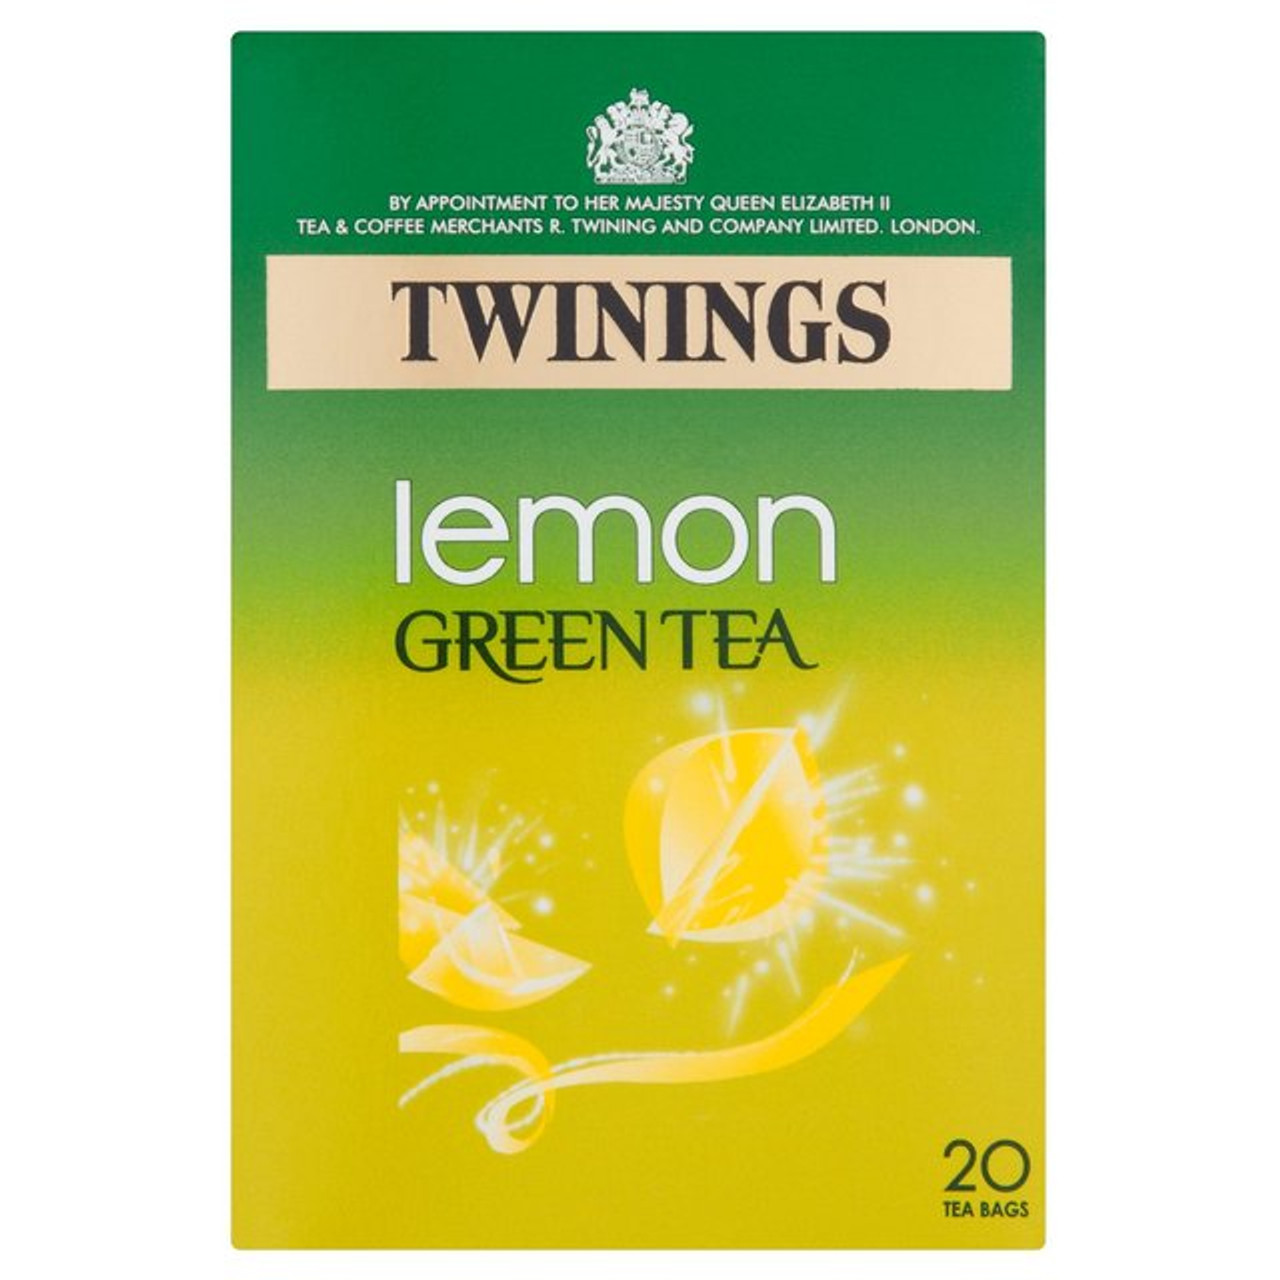 Twinings Lemon Green Tea 20 per pack - Caletoni - International Grocer